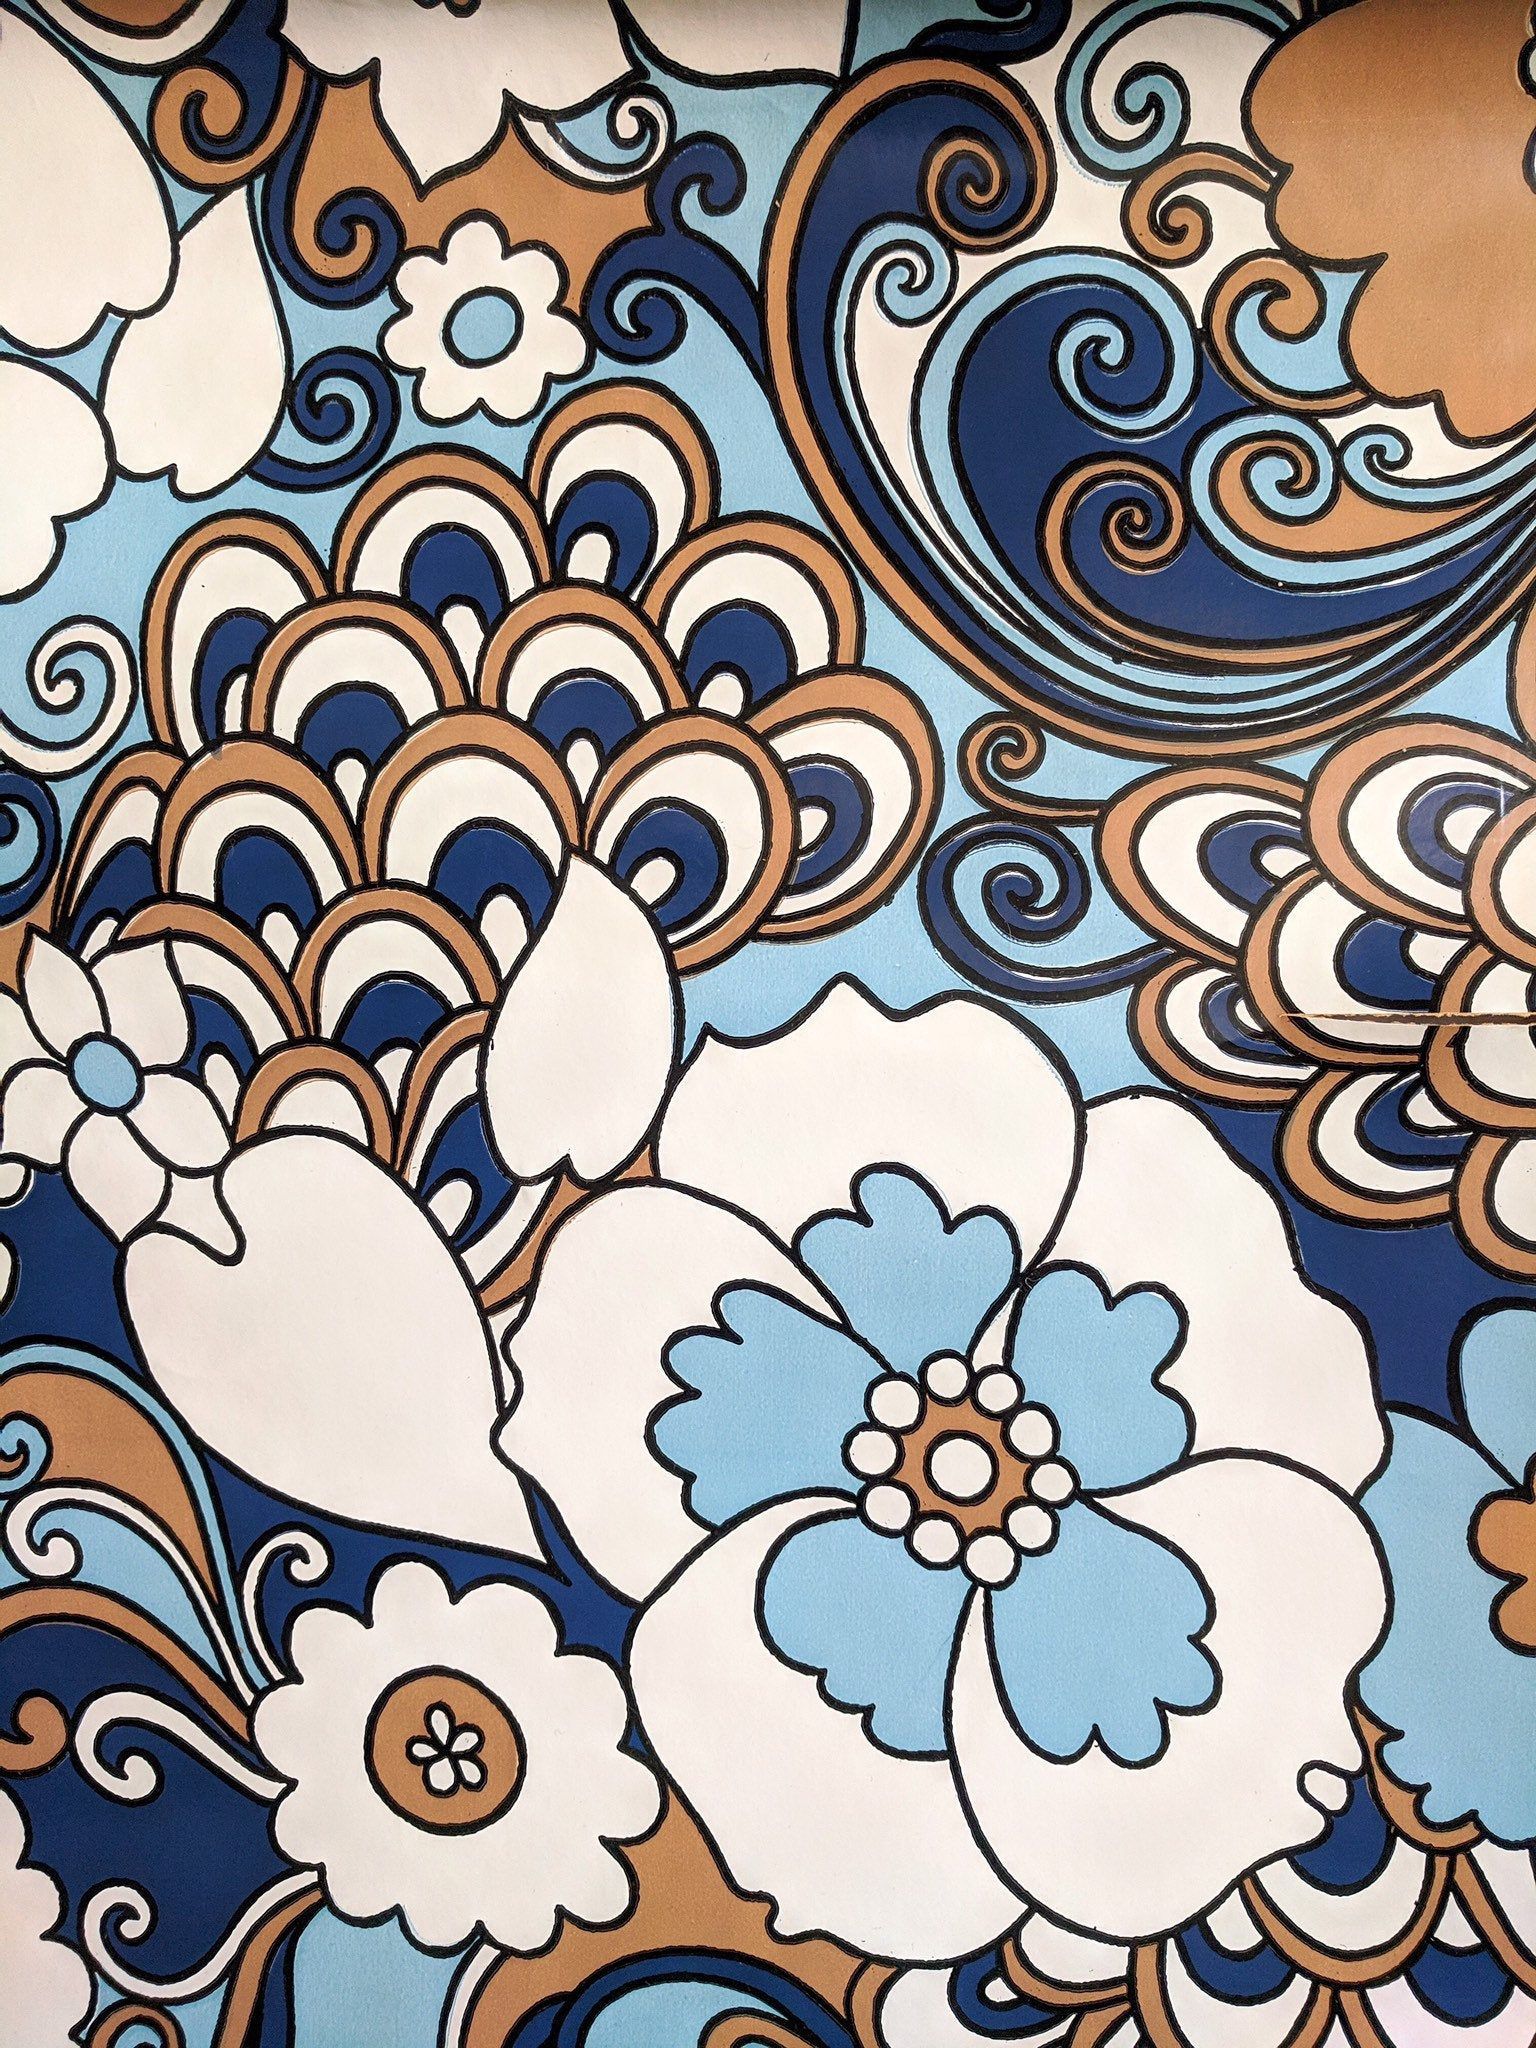 Big Blue Swirl Wallpapers